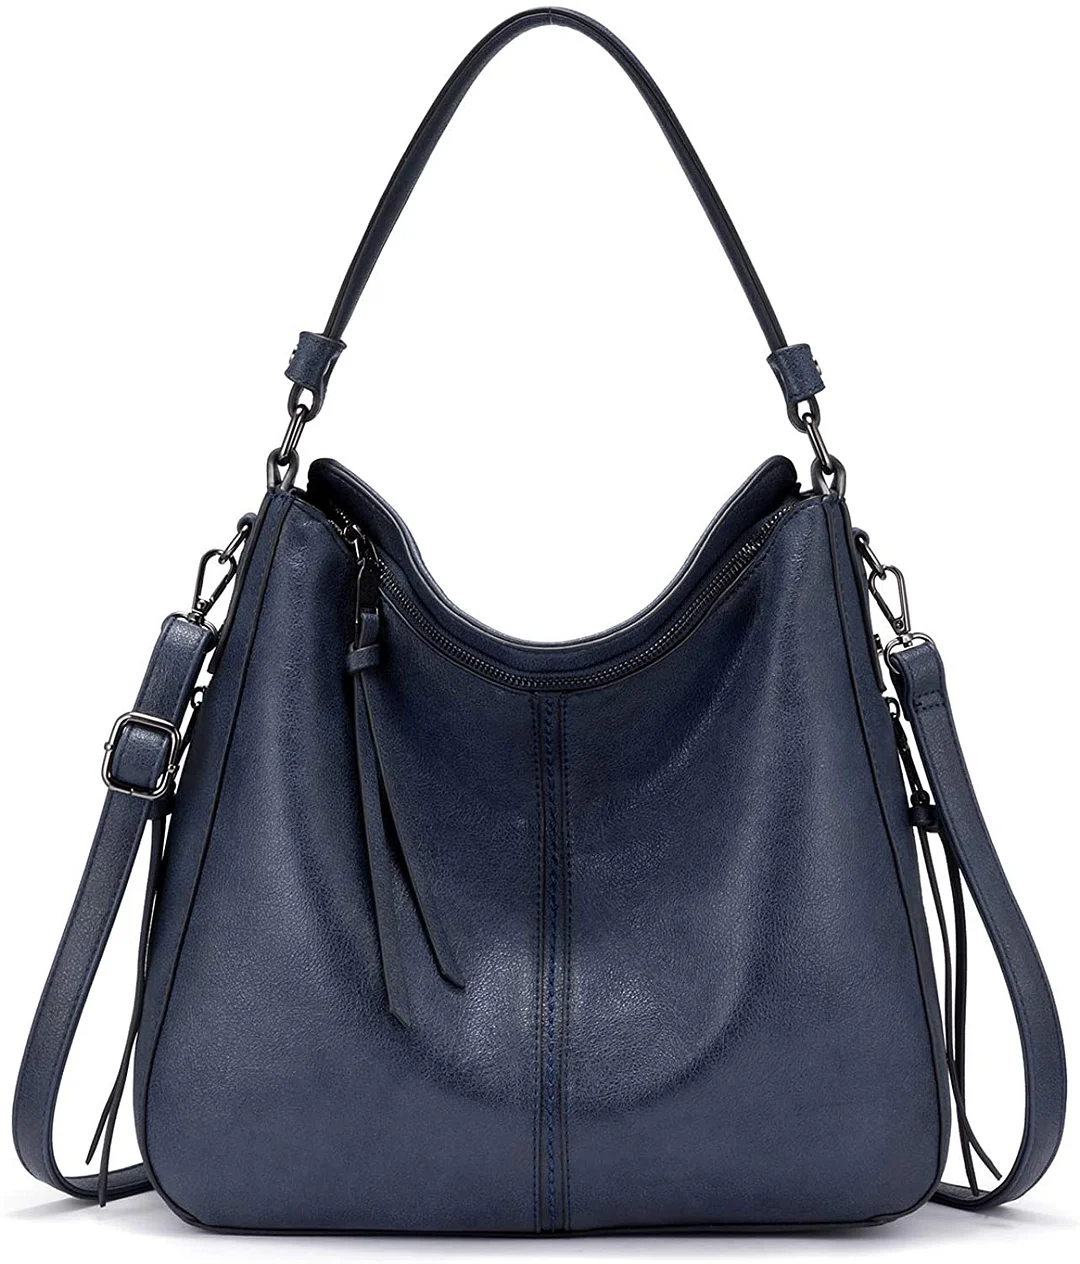 Handbags for Women Large Designer Ladies Hobo bag Bucket Purse Faux Leather